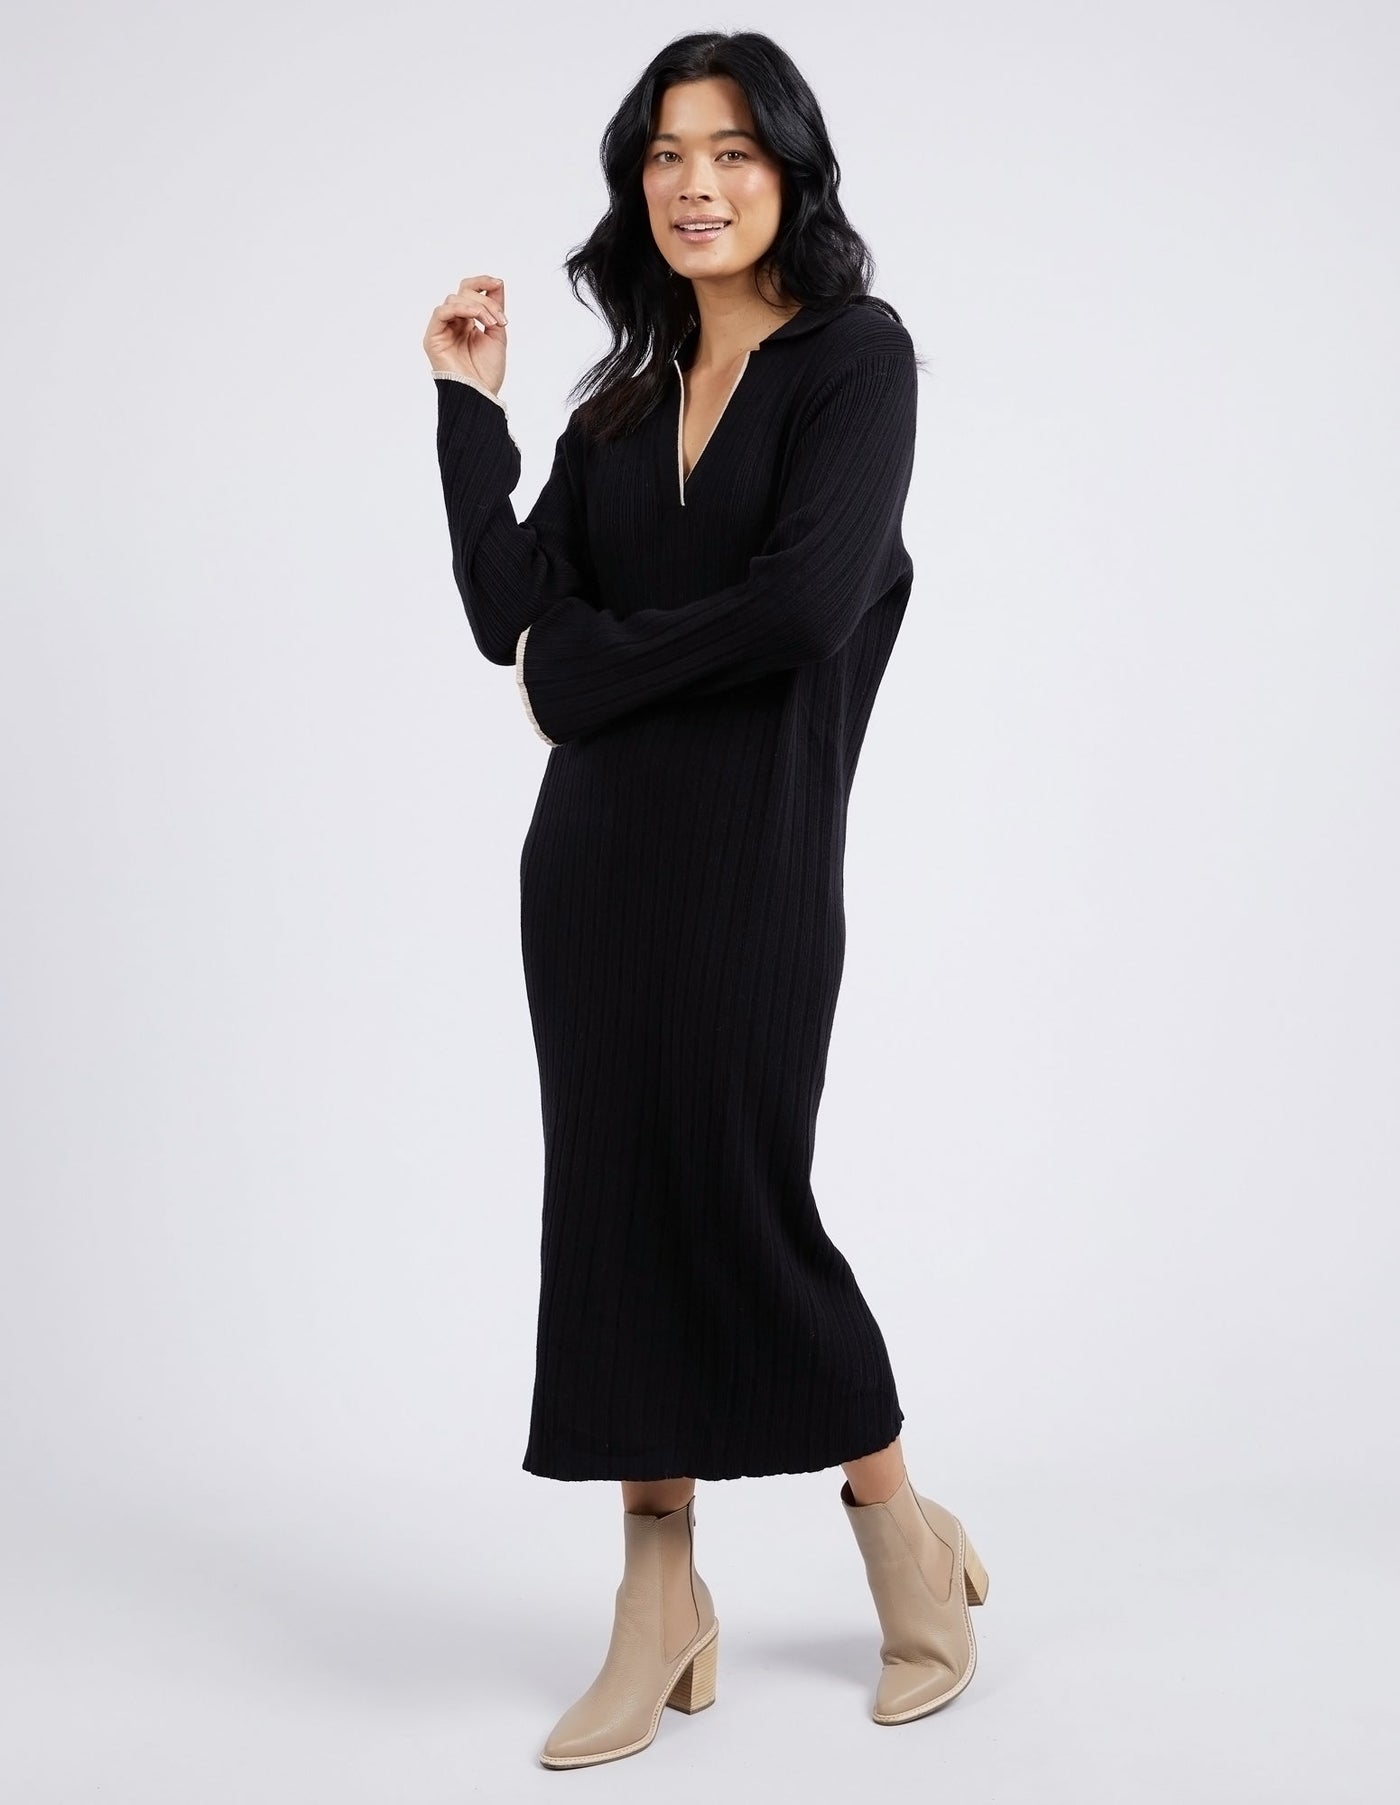 Maple Knit Dress - Black-Elm Lifestyle-Lima & Co